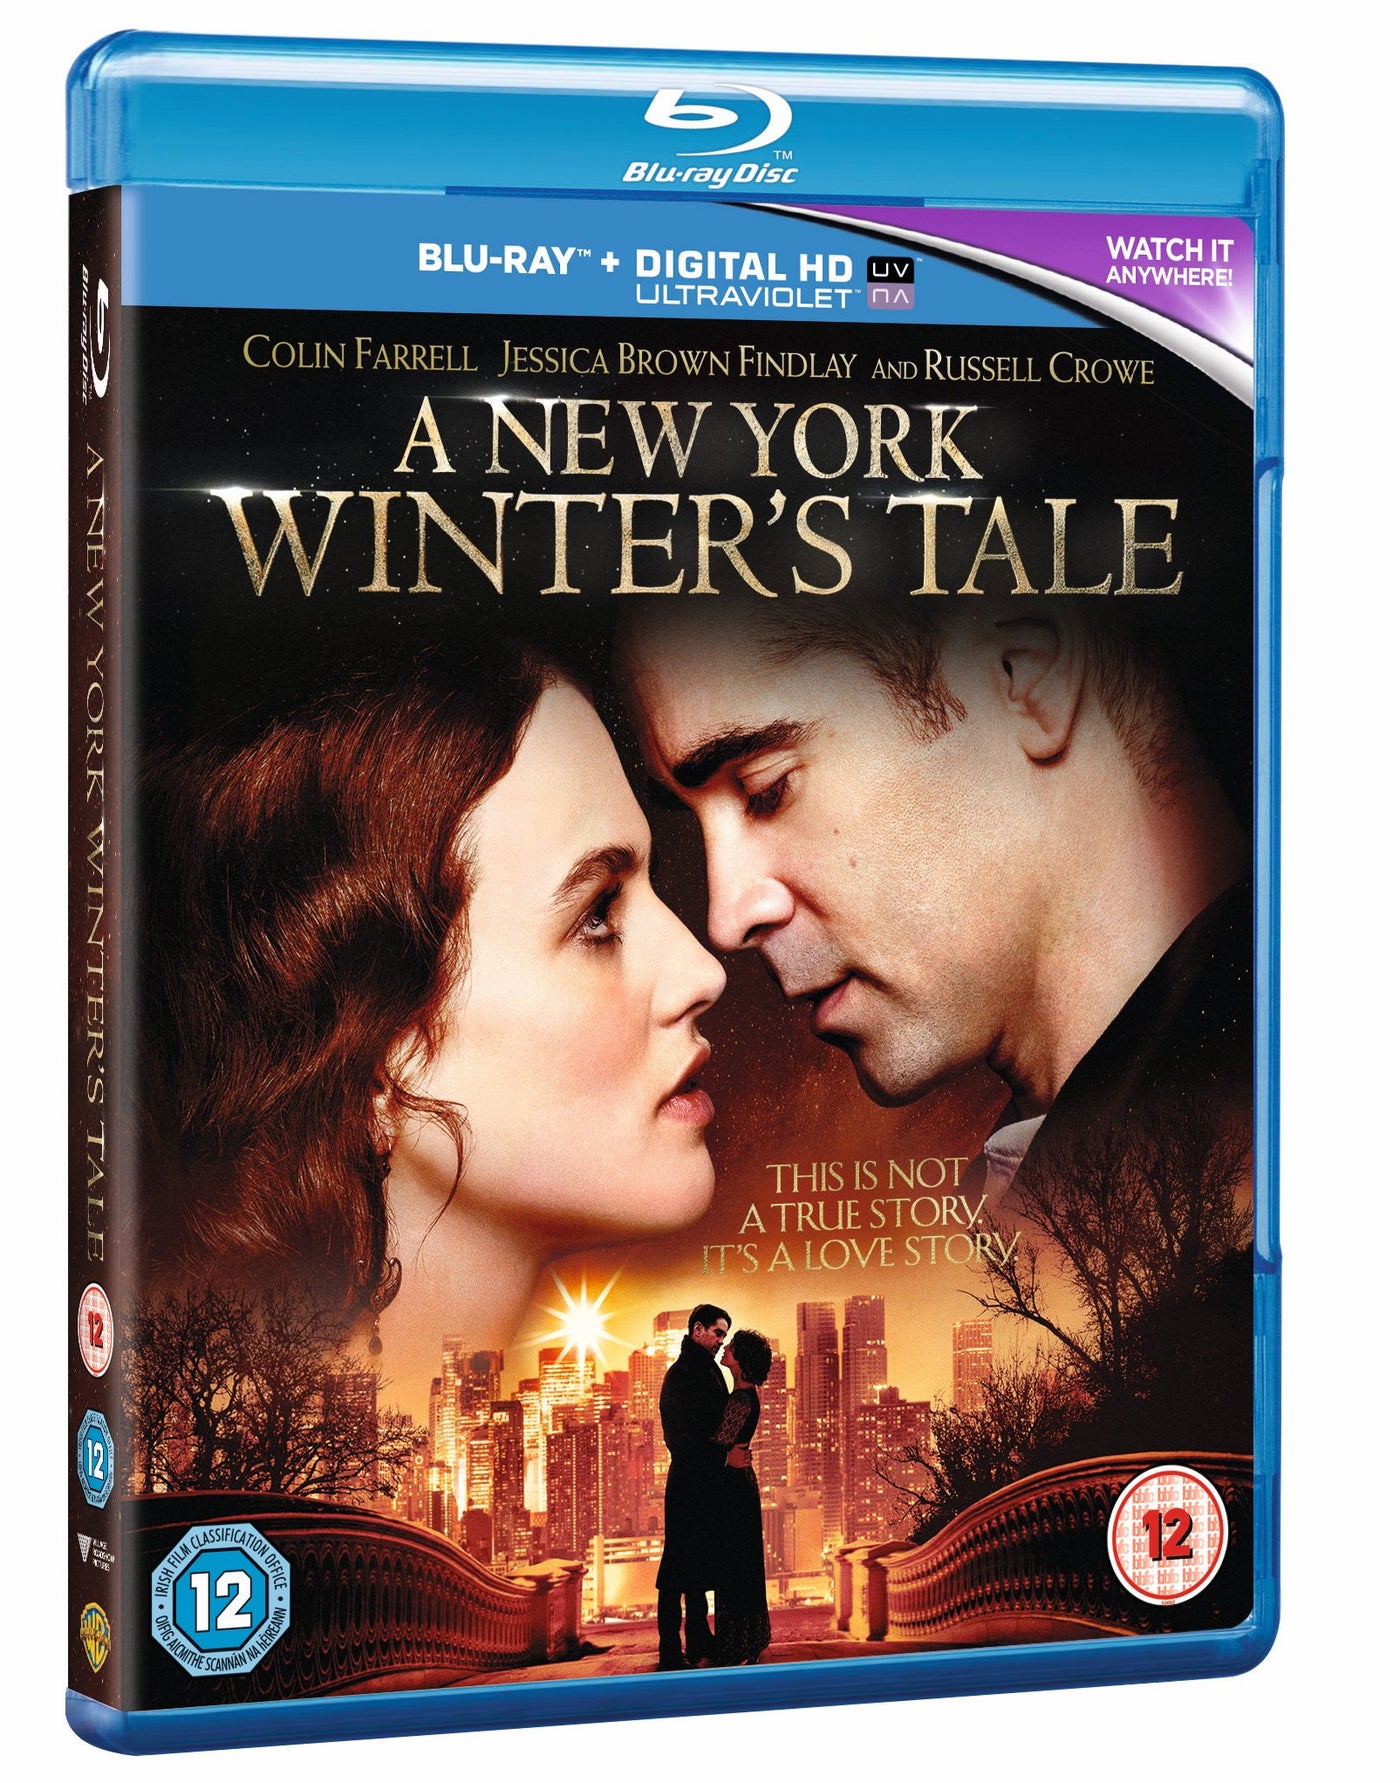 A New York Winter's Tale[2014] (Blu-ray)